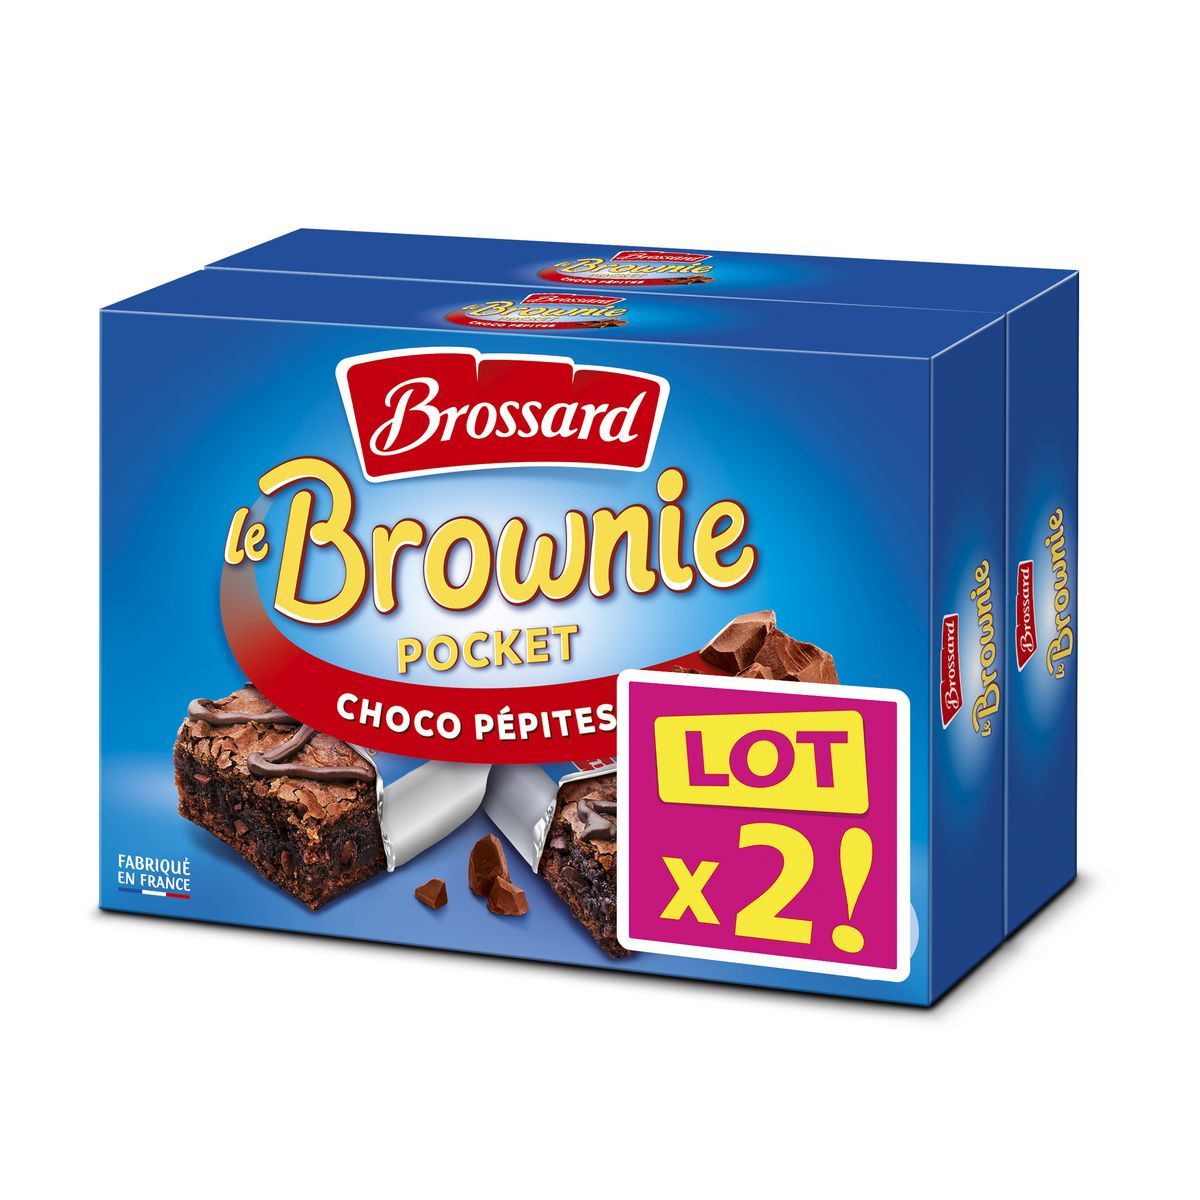 LE BROWNIE POCKET CHOCO PÉPITES BROSSARD